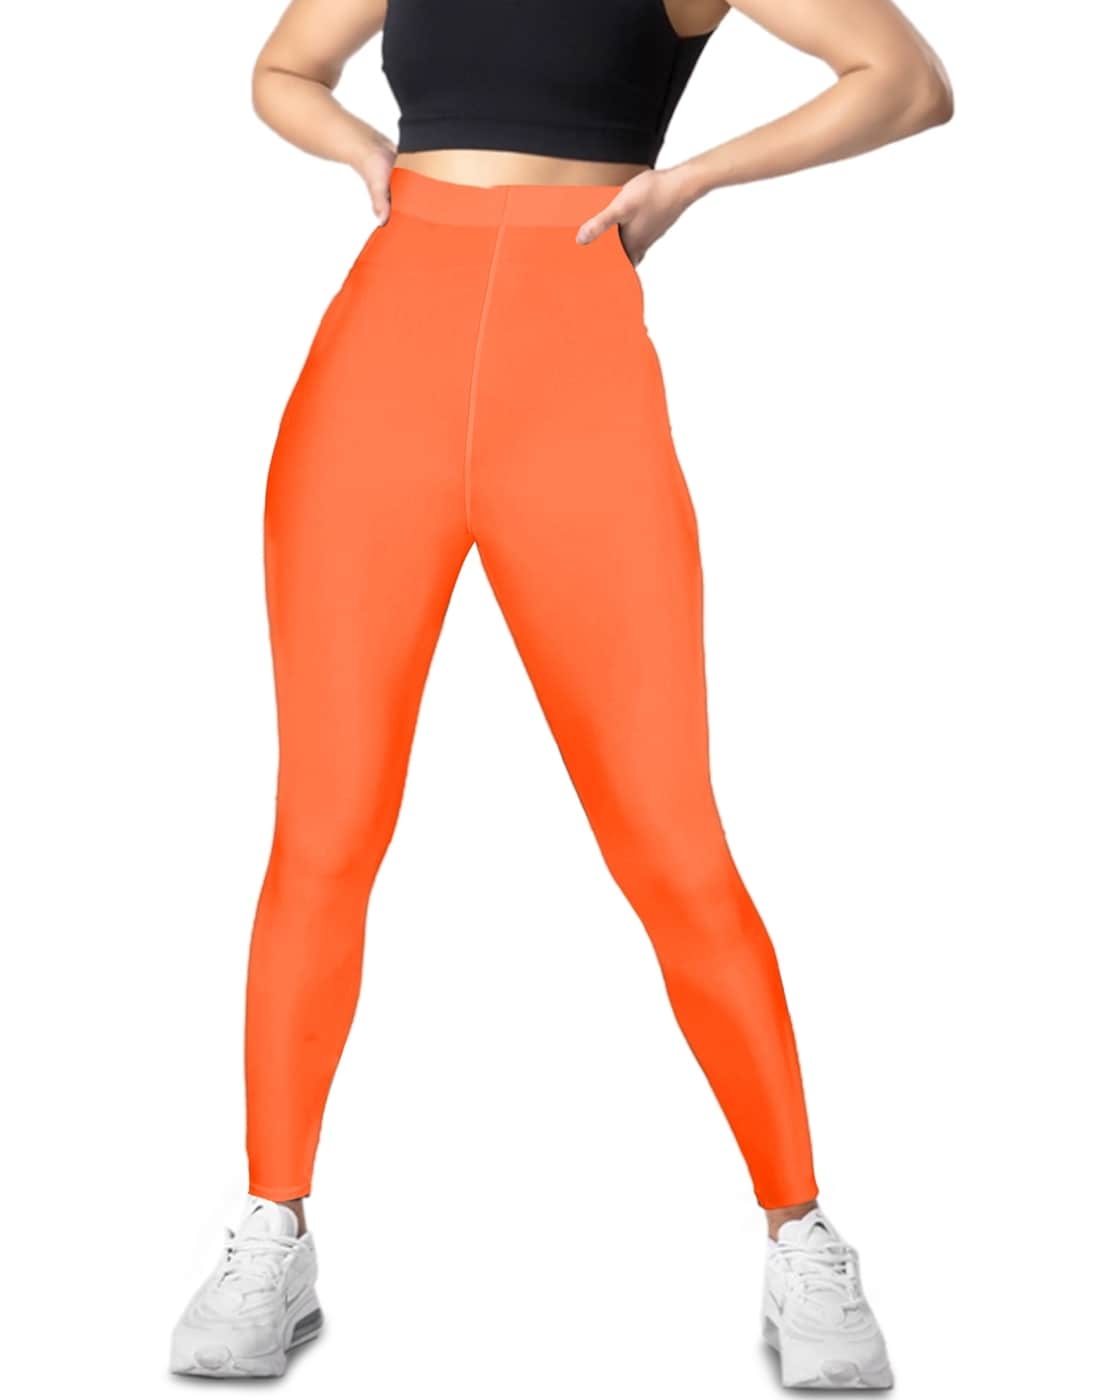 Alo Yoga Women's Orange Geometric Print Goddess Leggings Gym